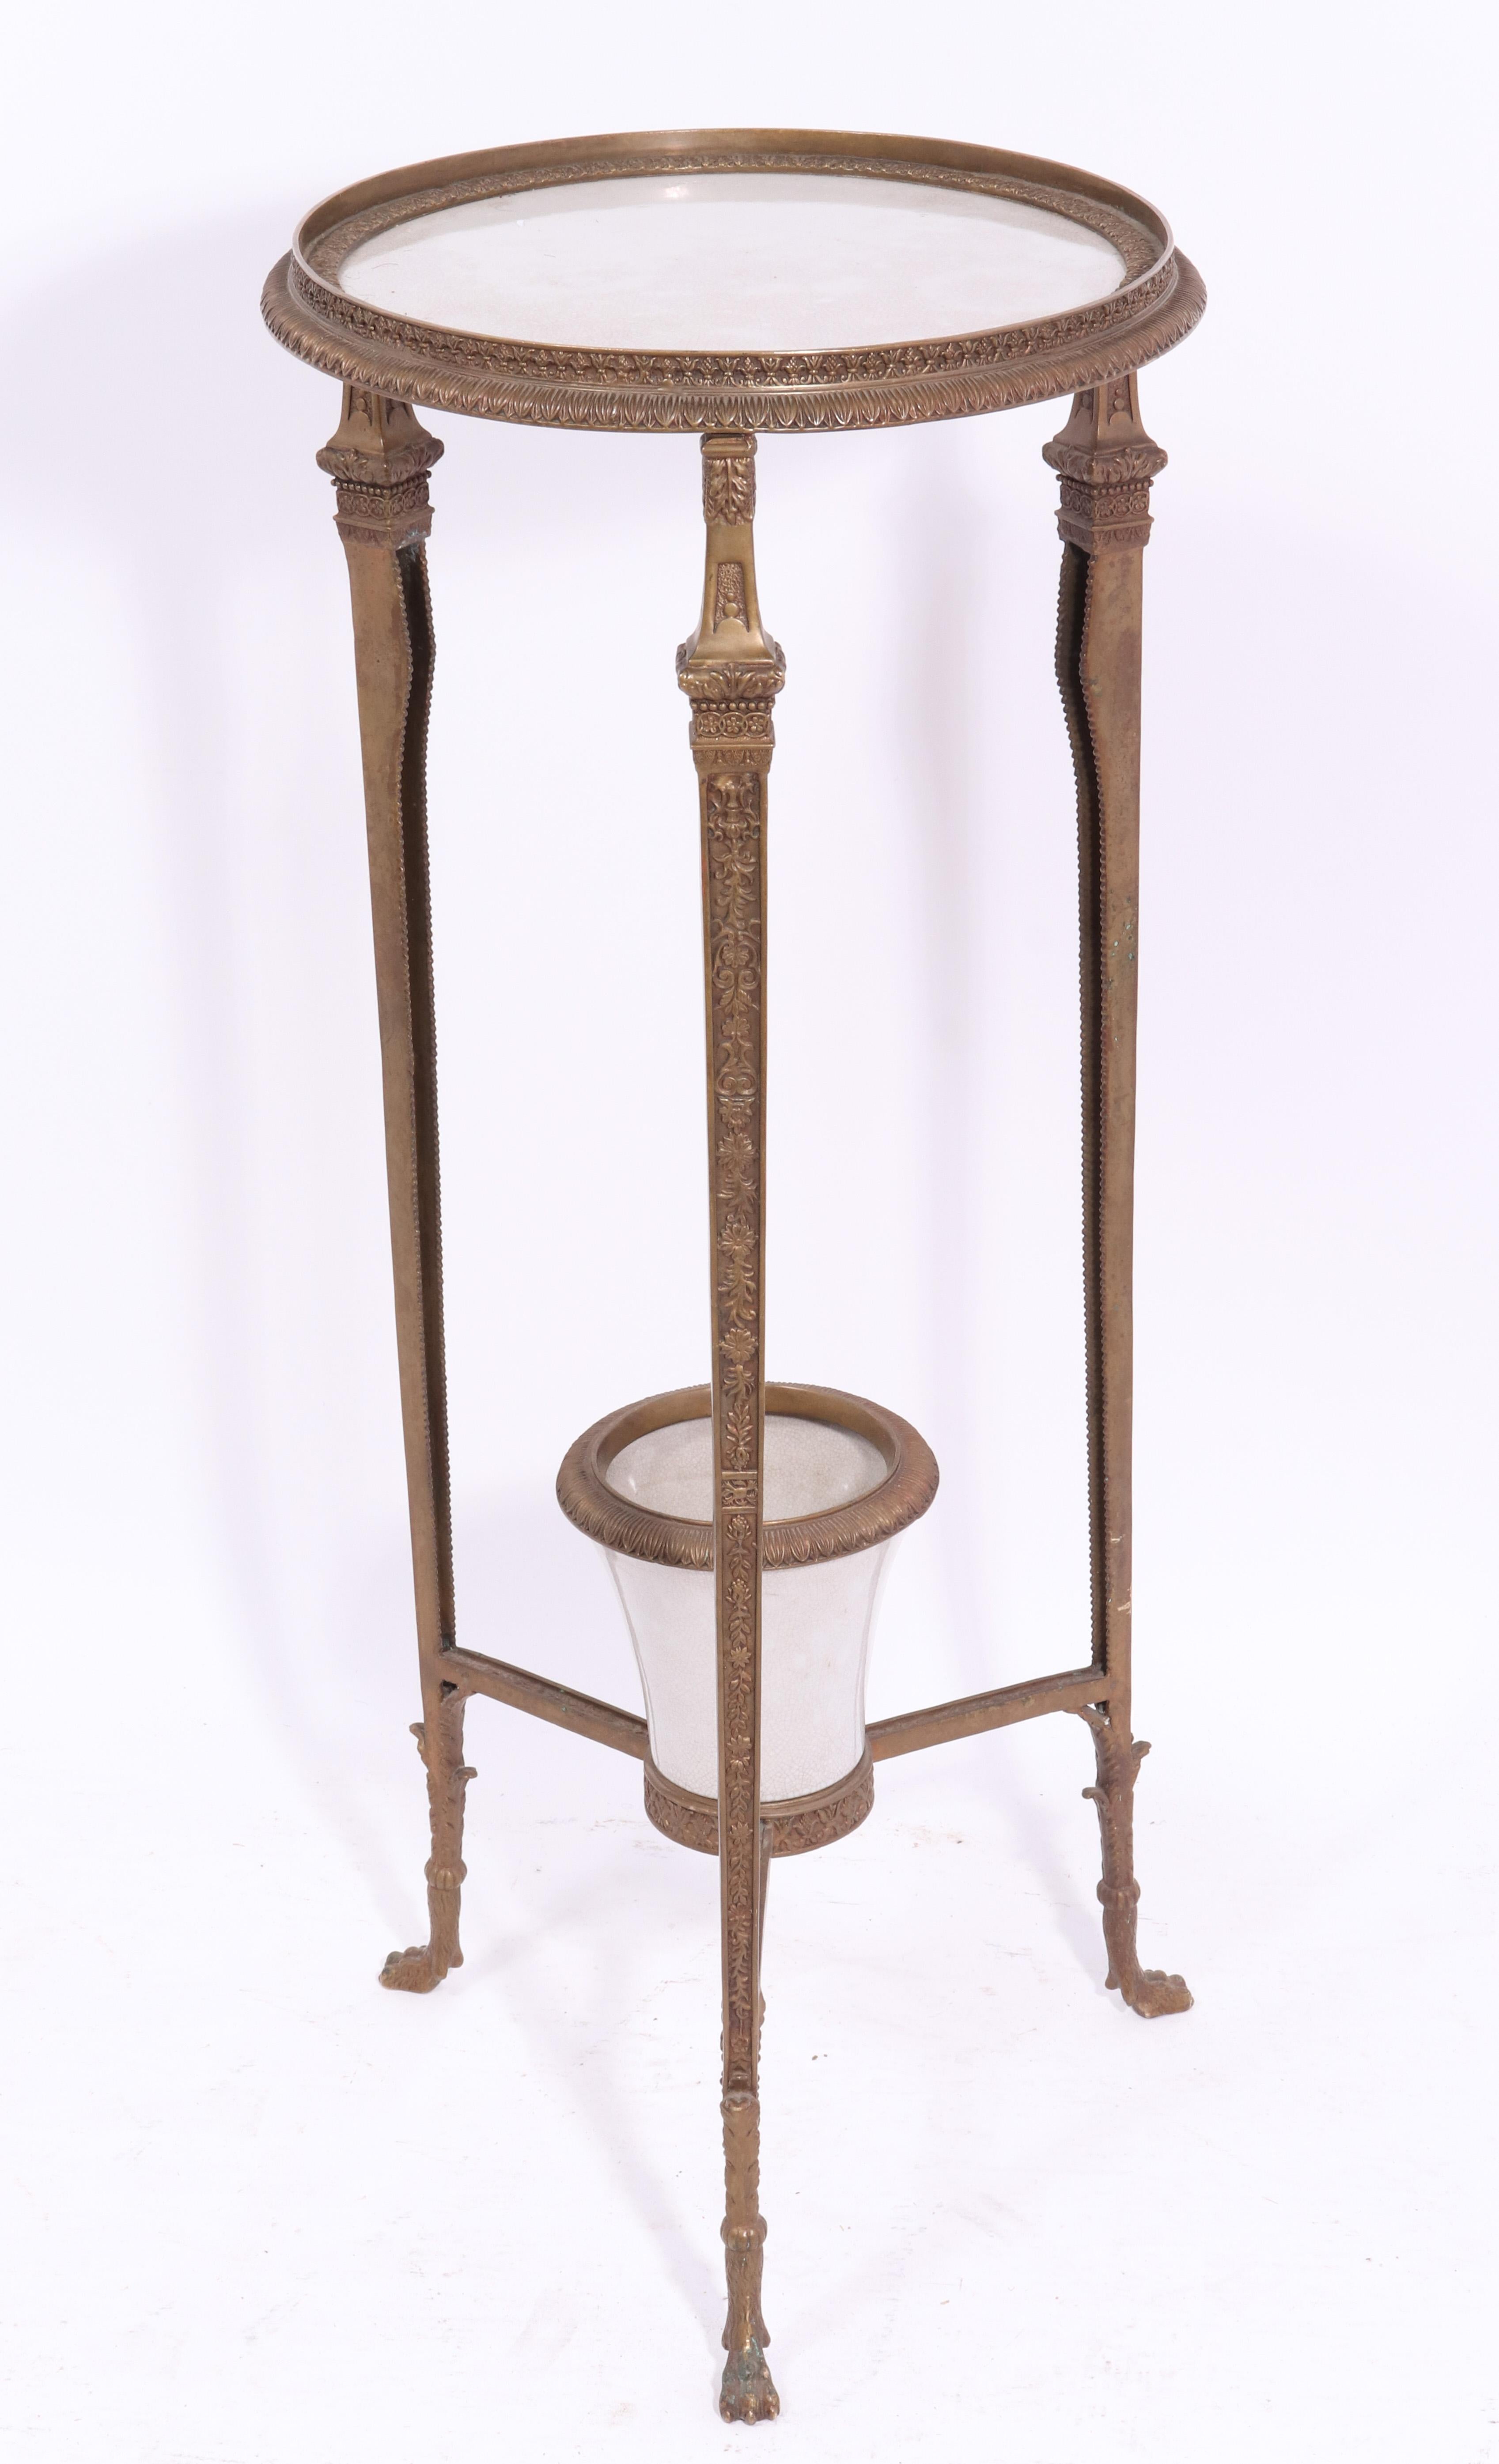 Empire Revival Style Gueridon Bronze Pedestal Table With Planter 2